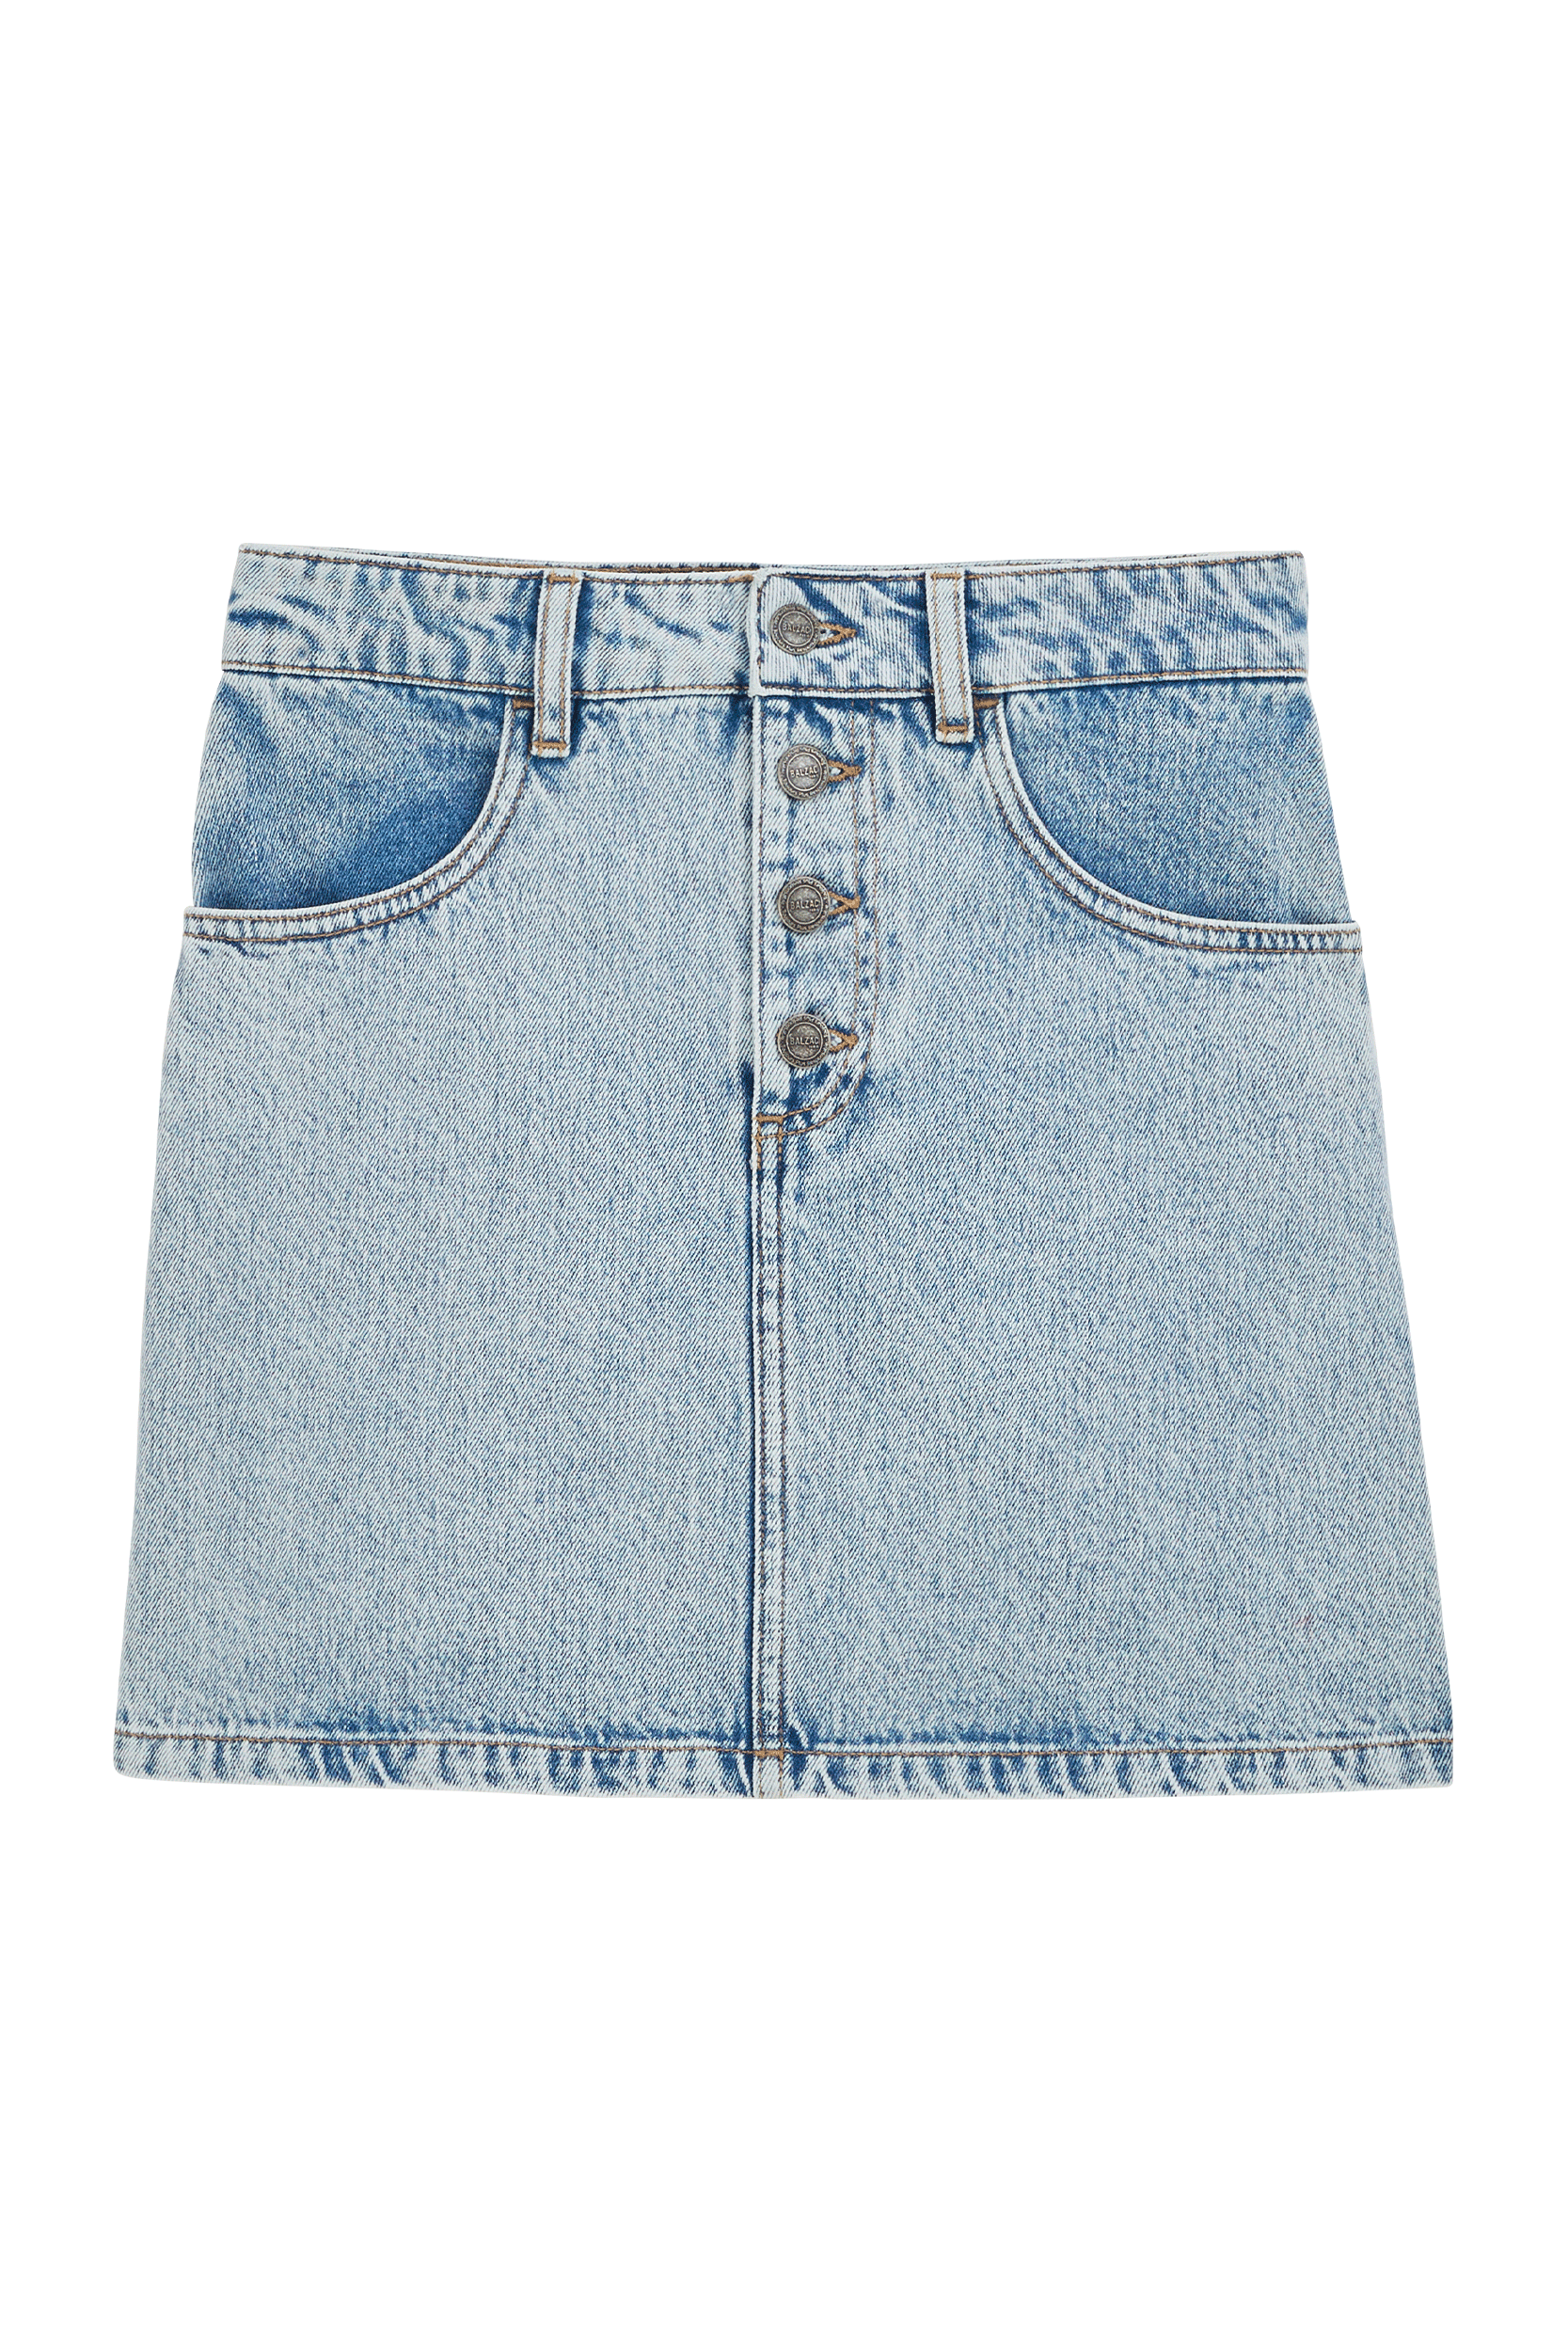 Glacier blue Sistine Mini Skirt